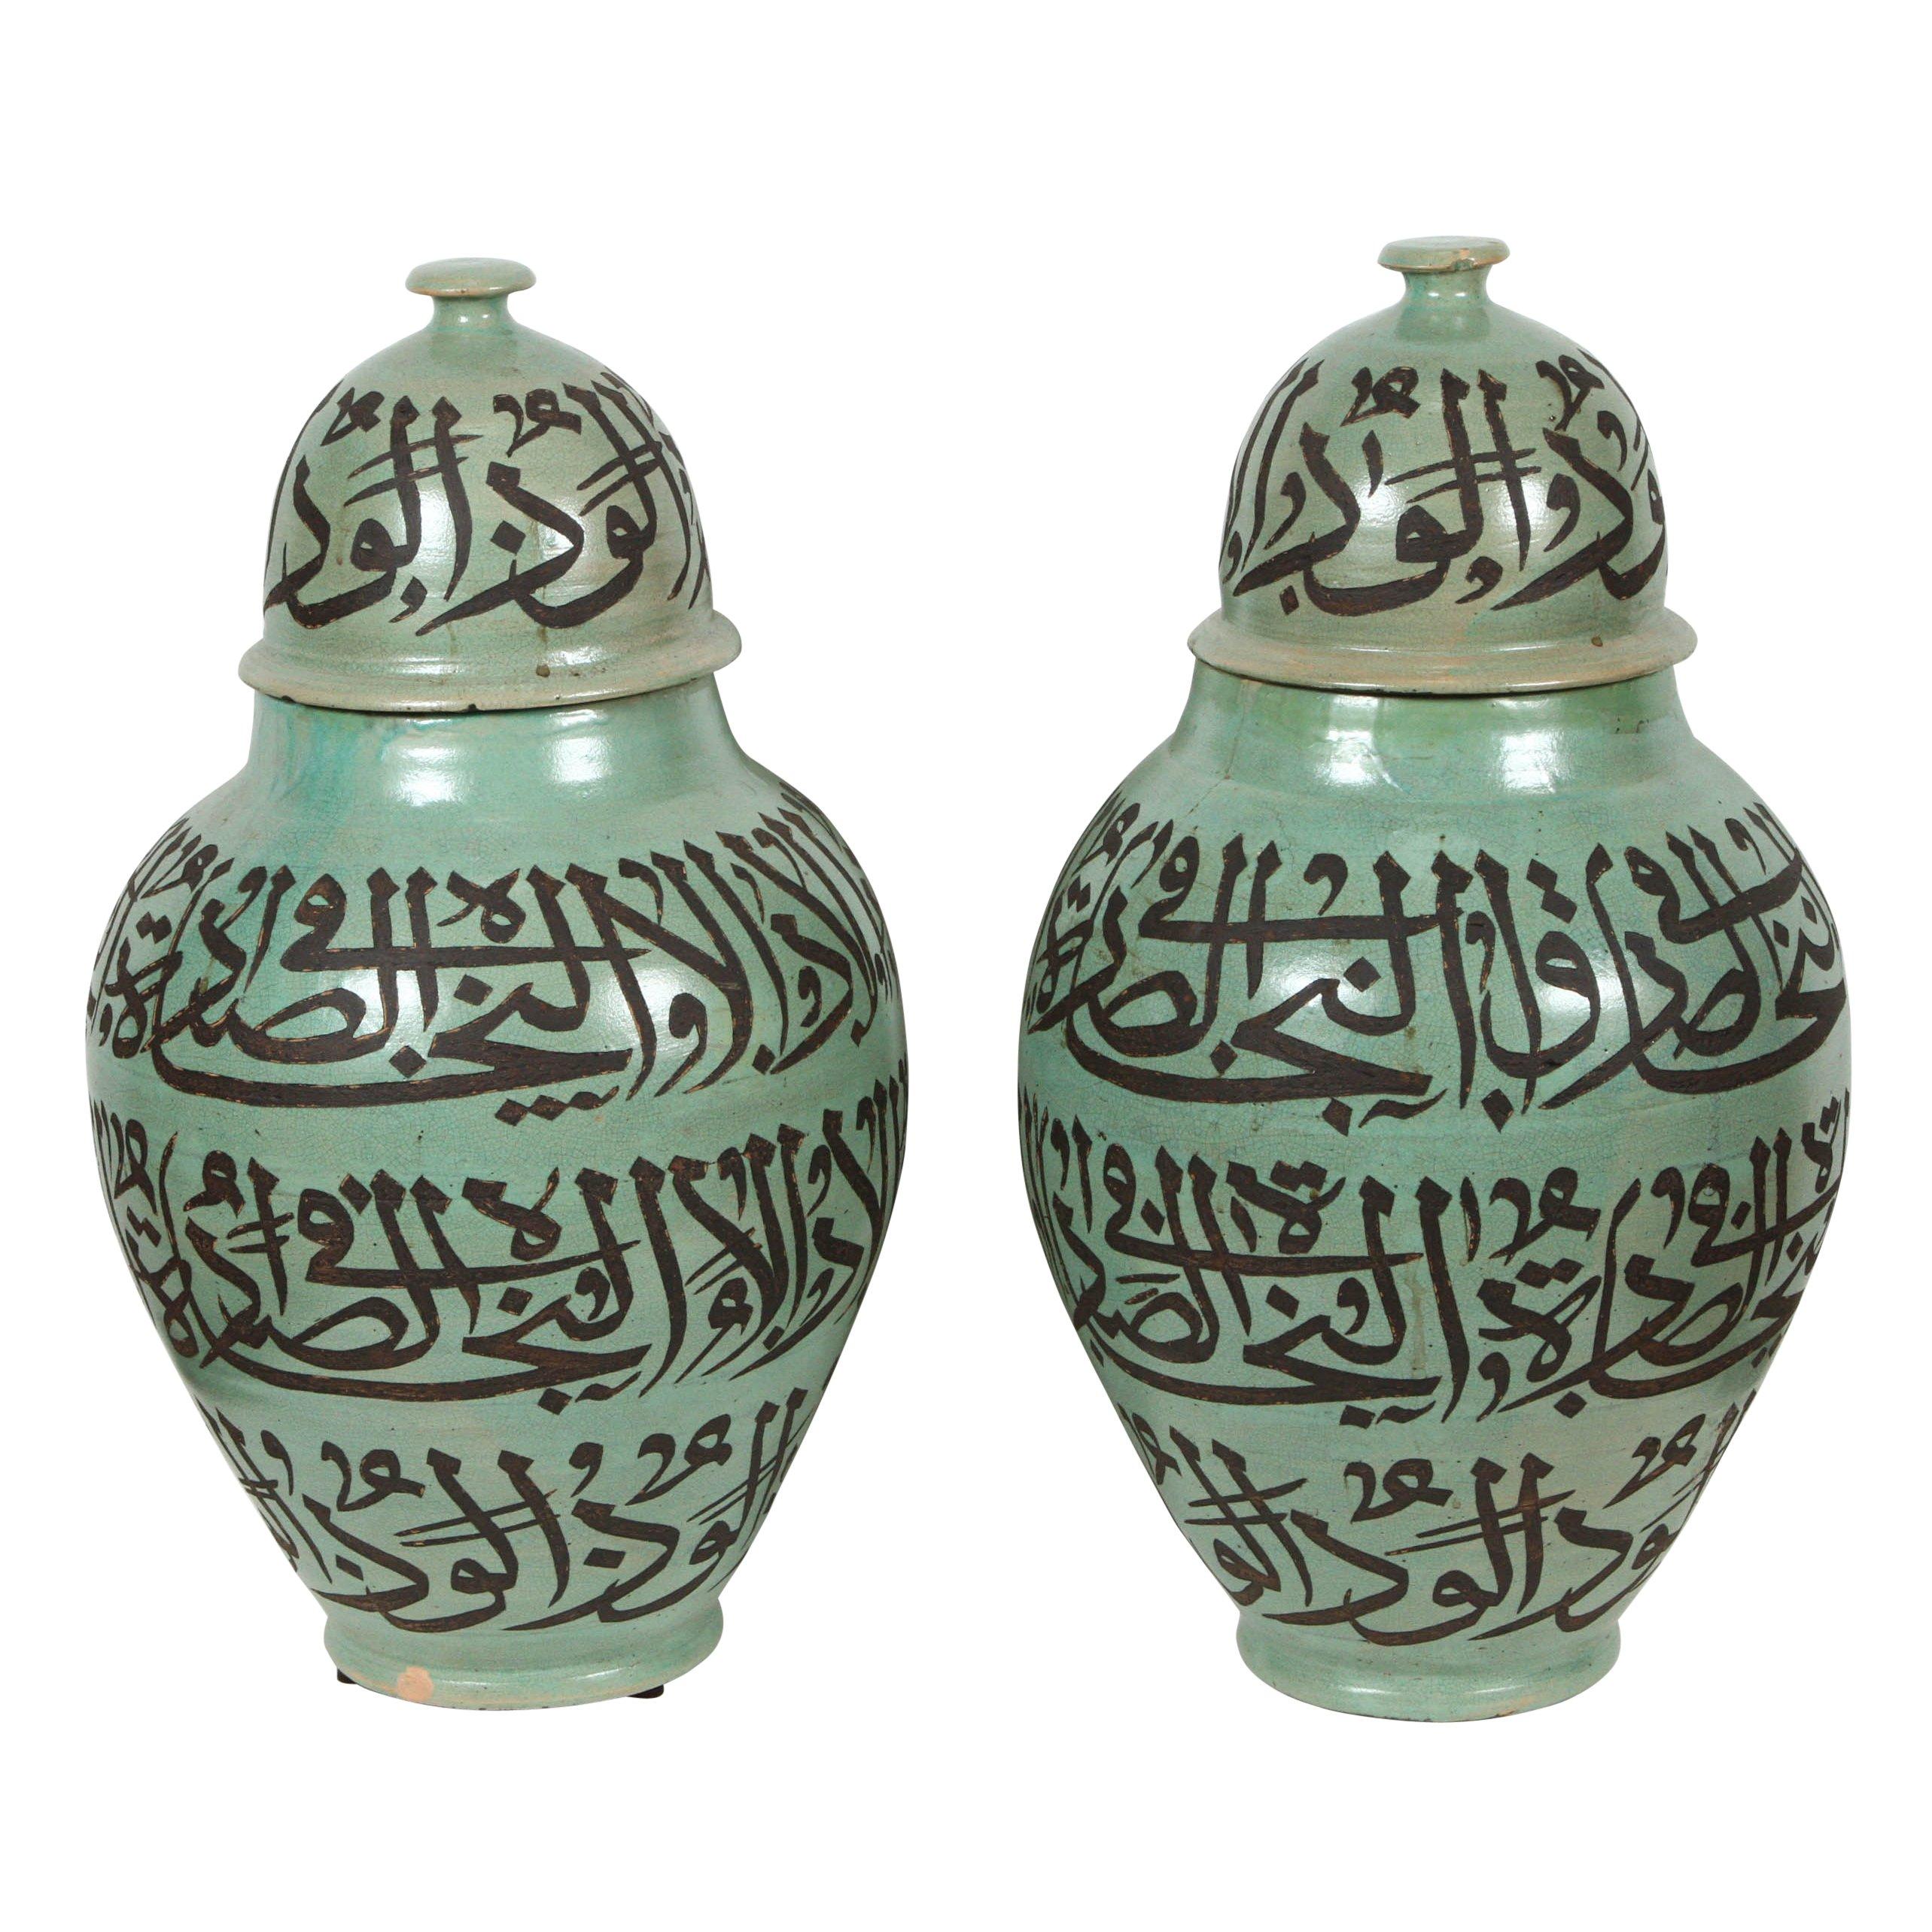 Green Moorish Ceramic Urns with Chiseled Arabic Calligraphy Writing